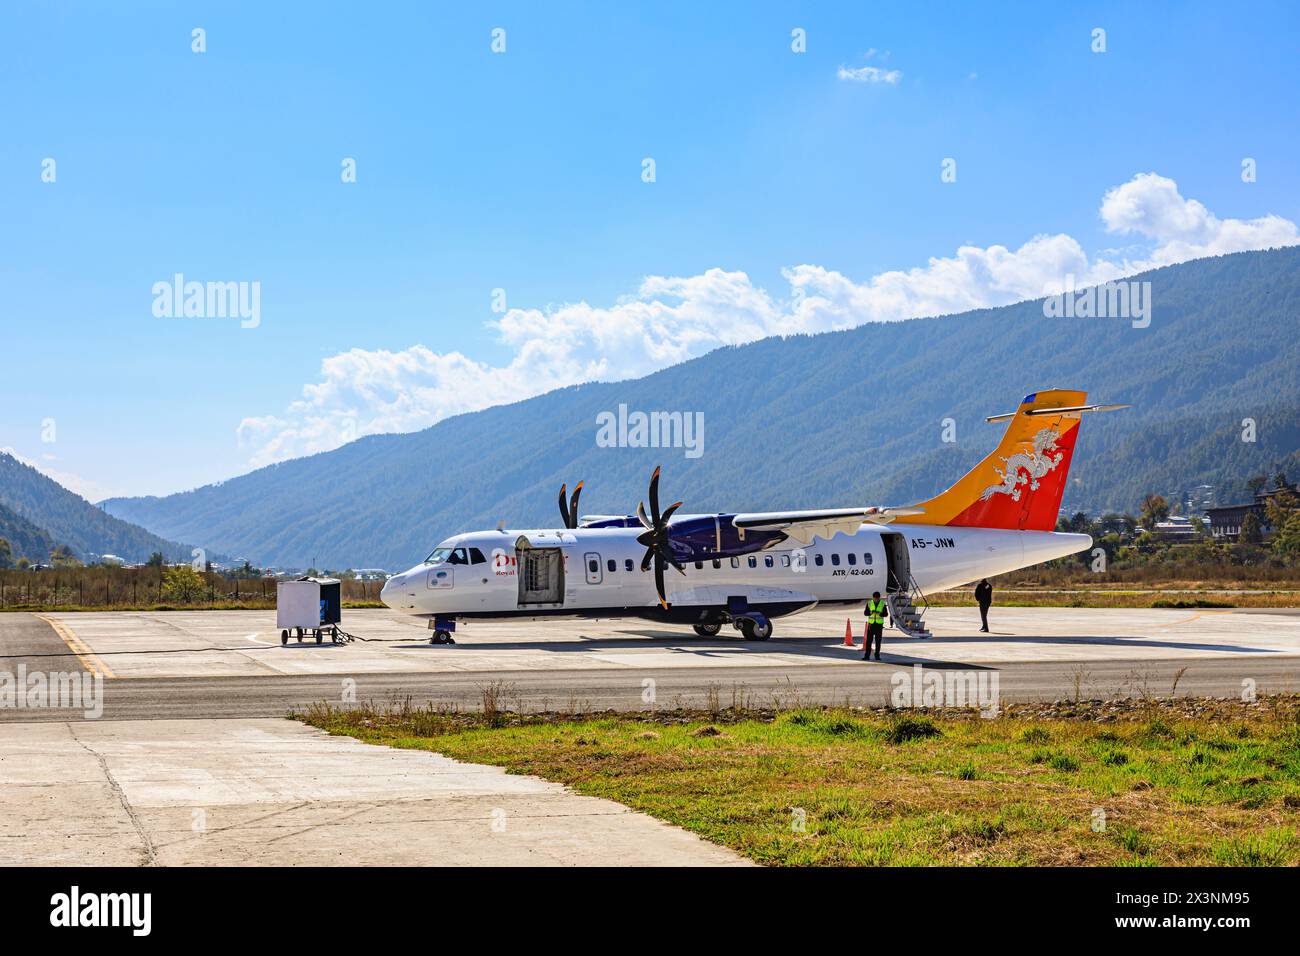 Druk Air Royal Bhutan Airlines ATR 42-600 passeggeri presso Bathpalathang, un aeroporto nazionale bhutanese a Jakar, distretto di Bumthang, Bhutan Foto Stock